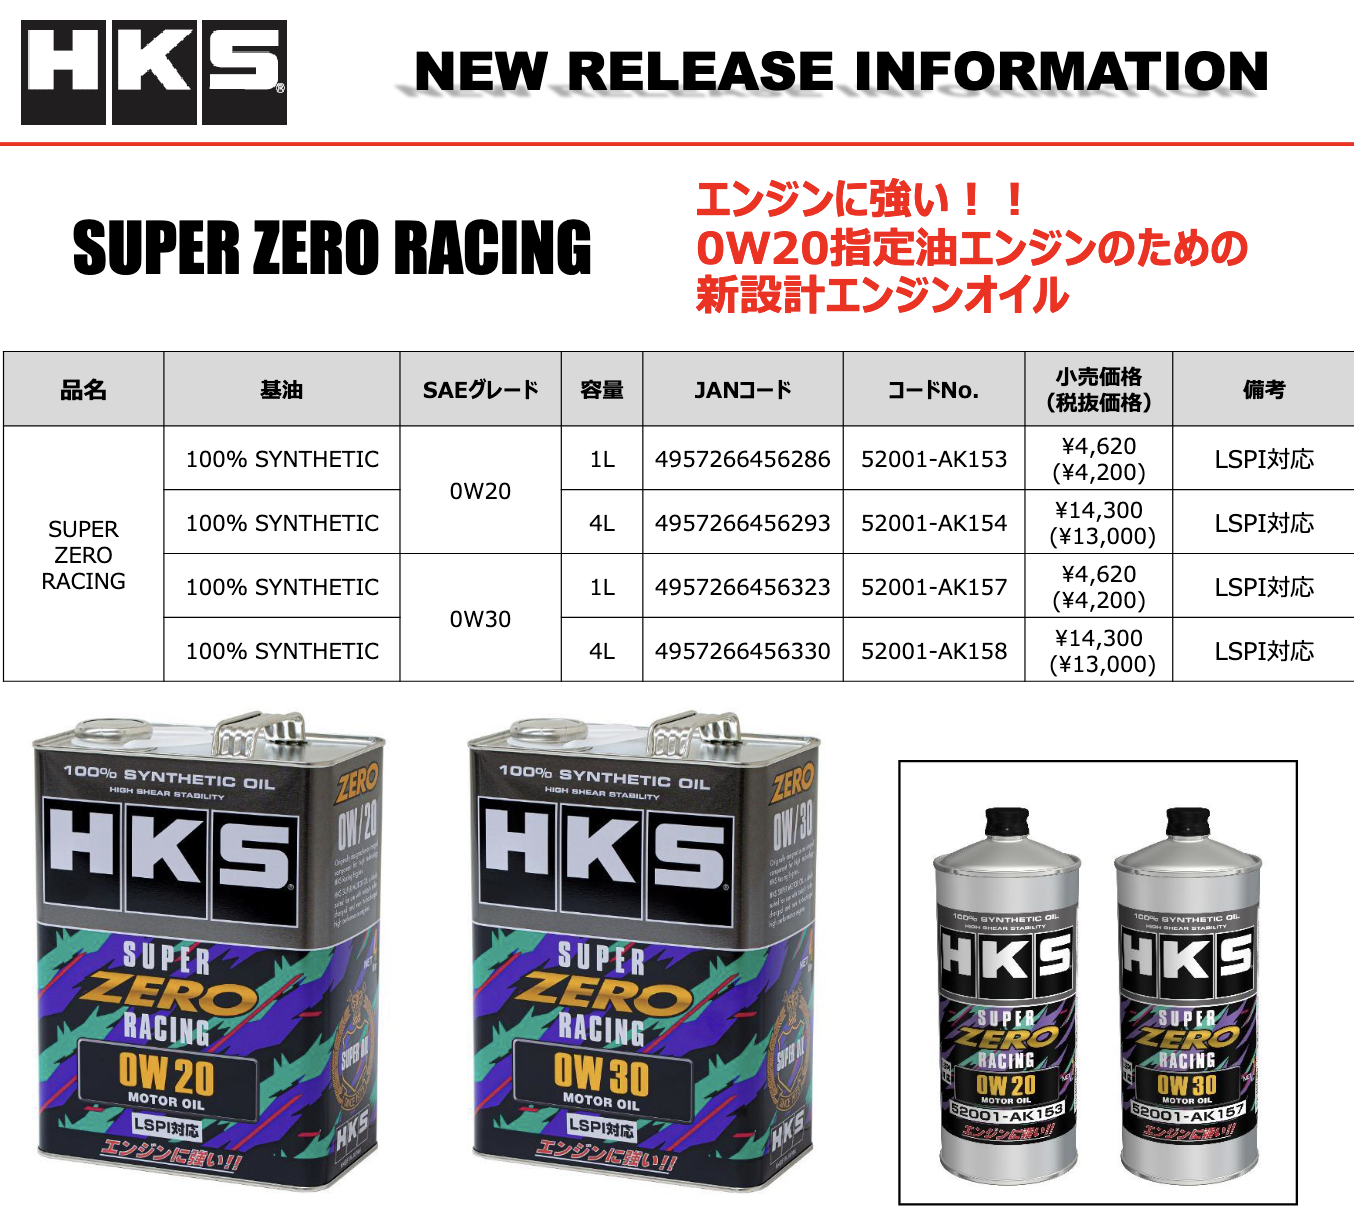 New Release Information - HKS Super Zero Racing Engine Oil 